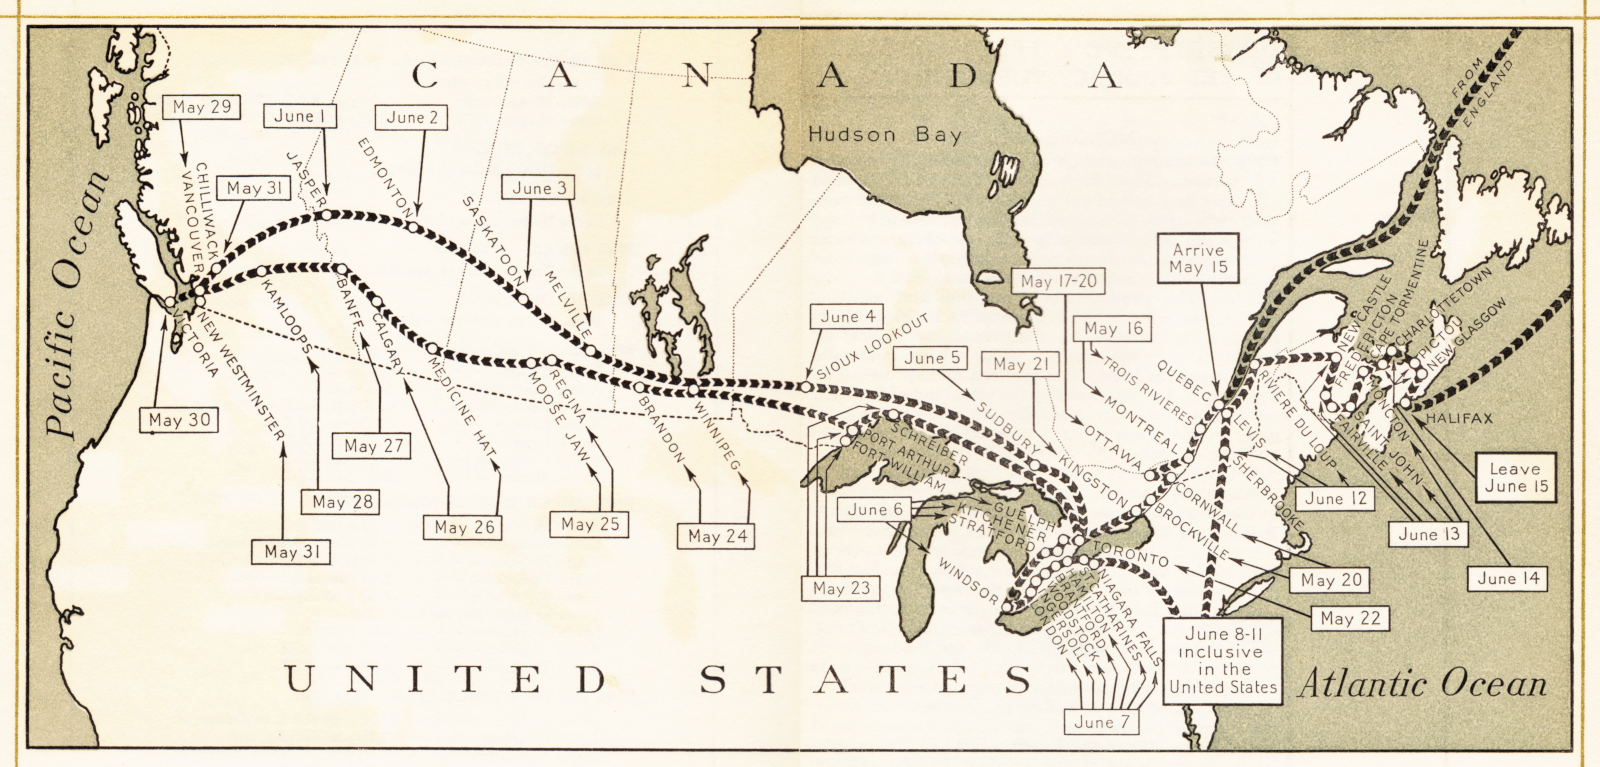 1939 royal tour canada itinerary